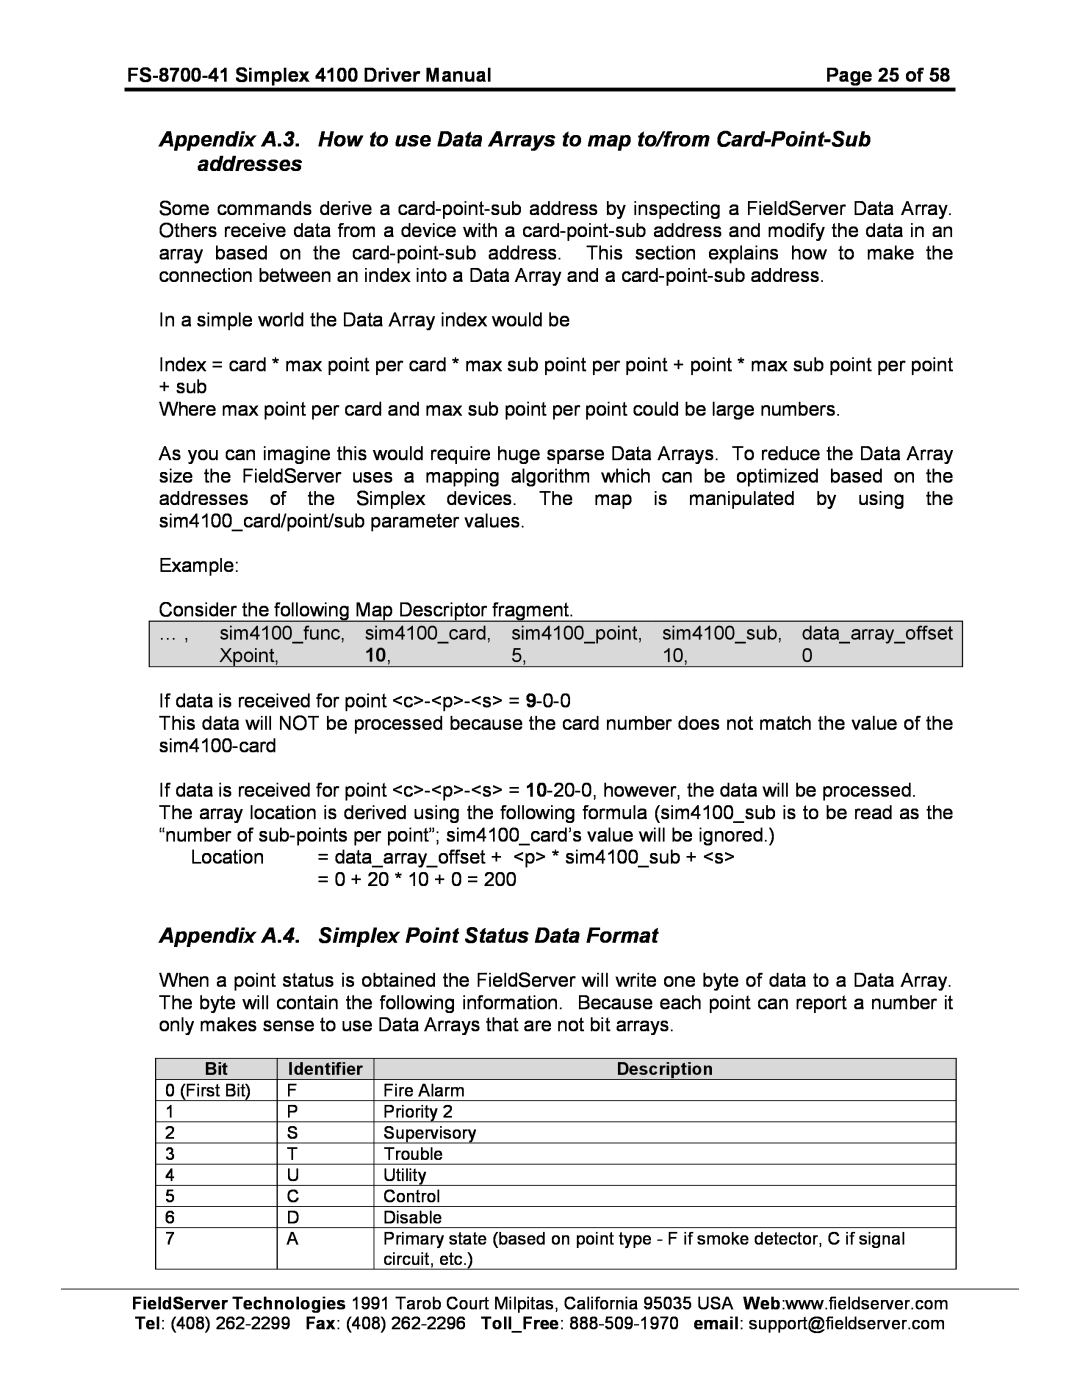 FieldServer FS-8700-41 instruction manual Appendix A.4. Simplex Point Status Data Format 